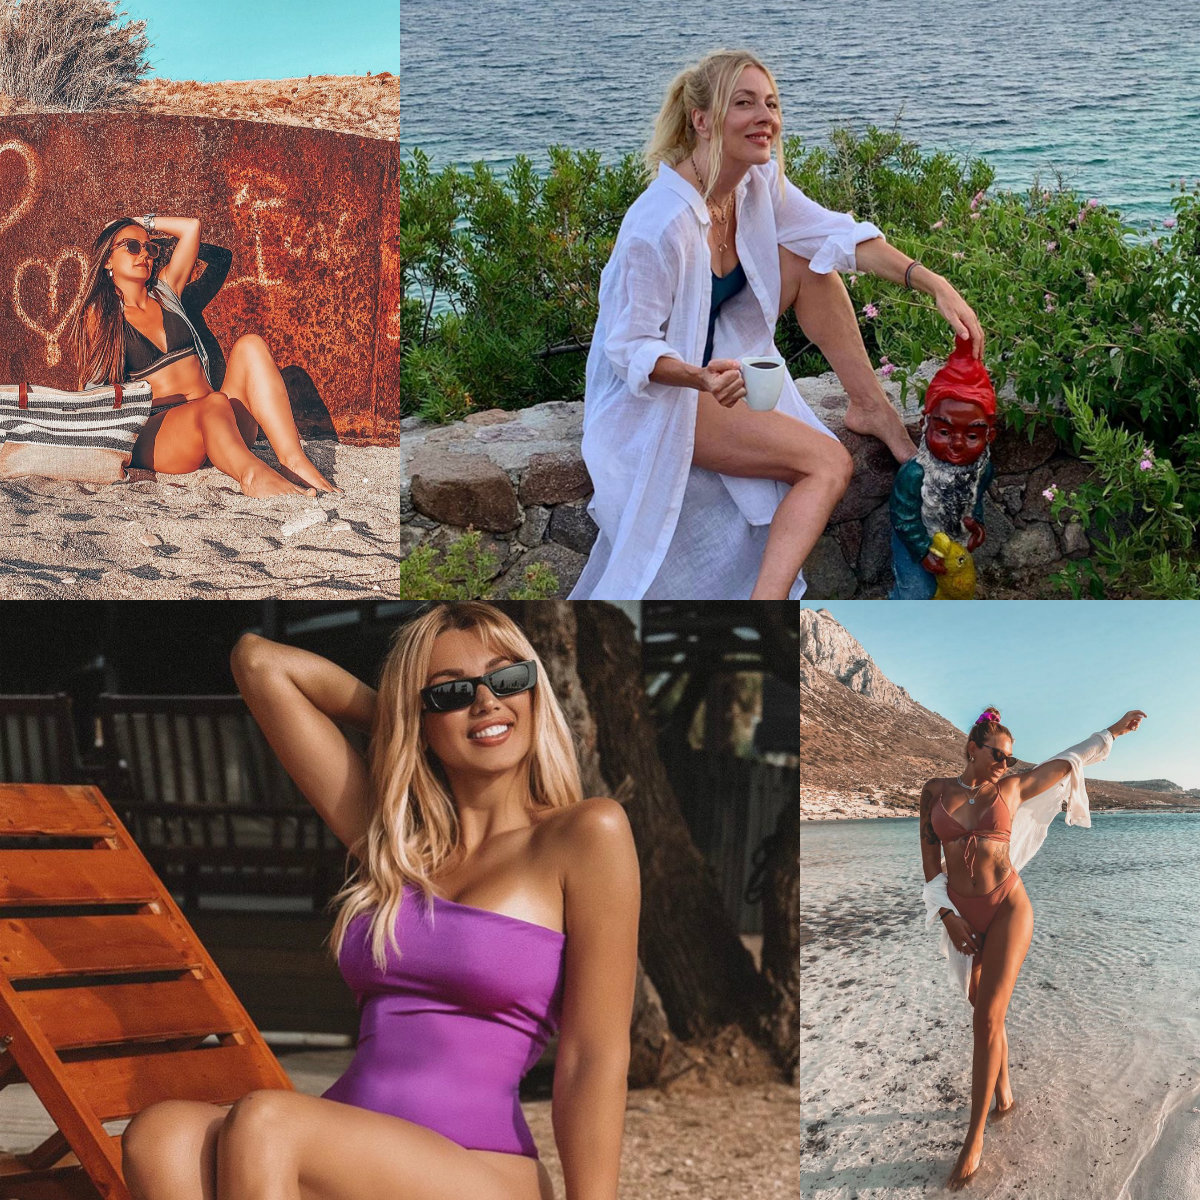 Beach report: Tan, sun and fun για τις σταρ του Instagram